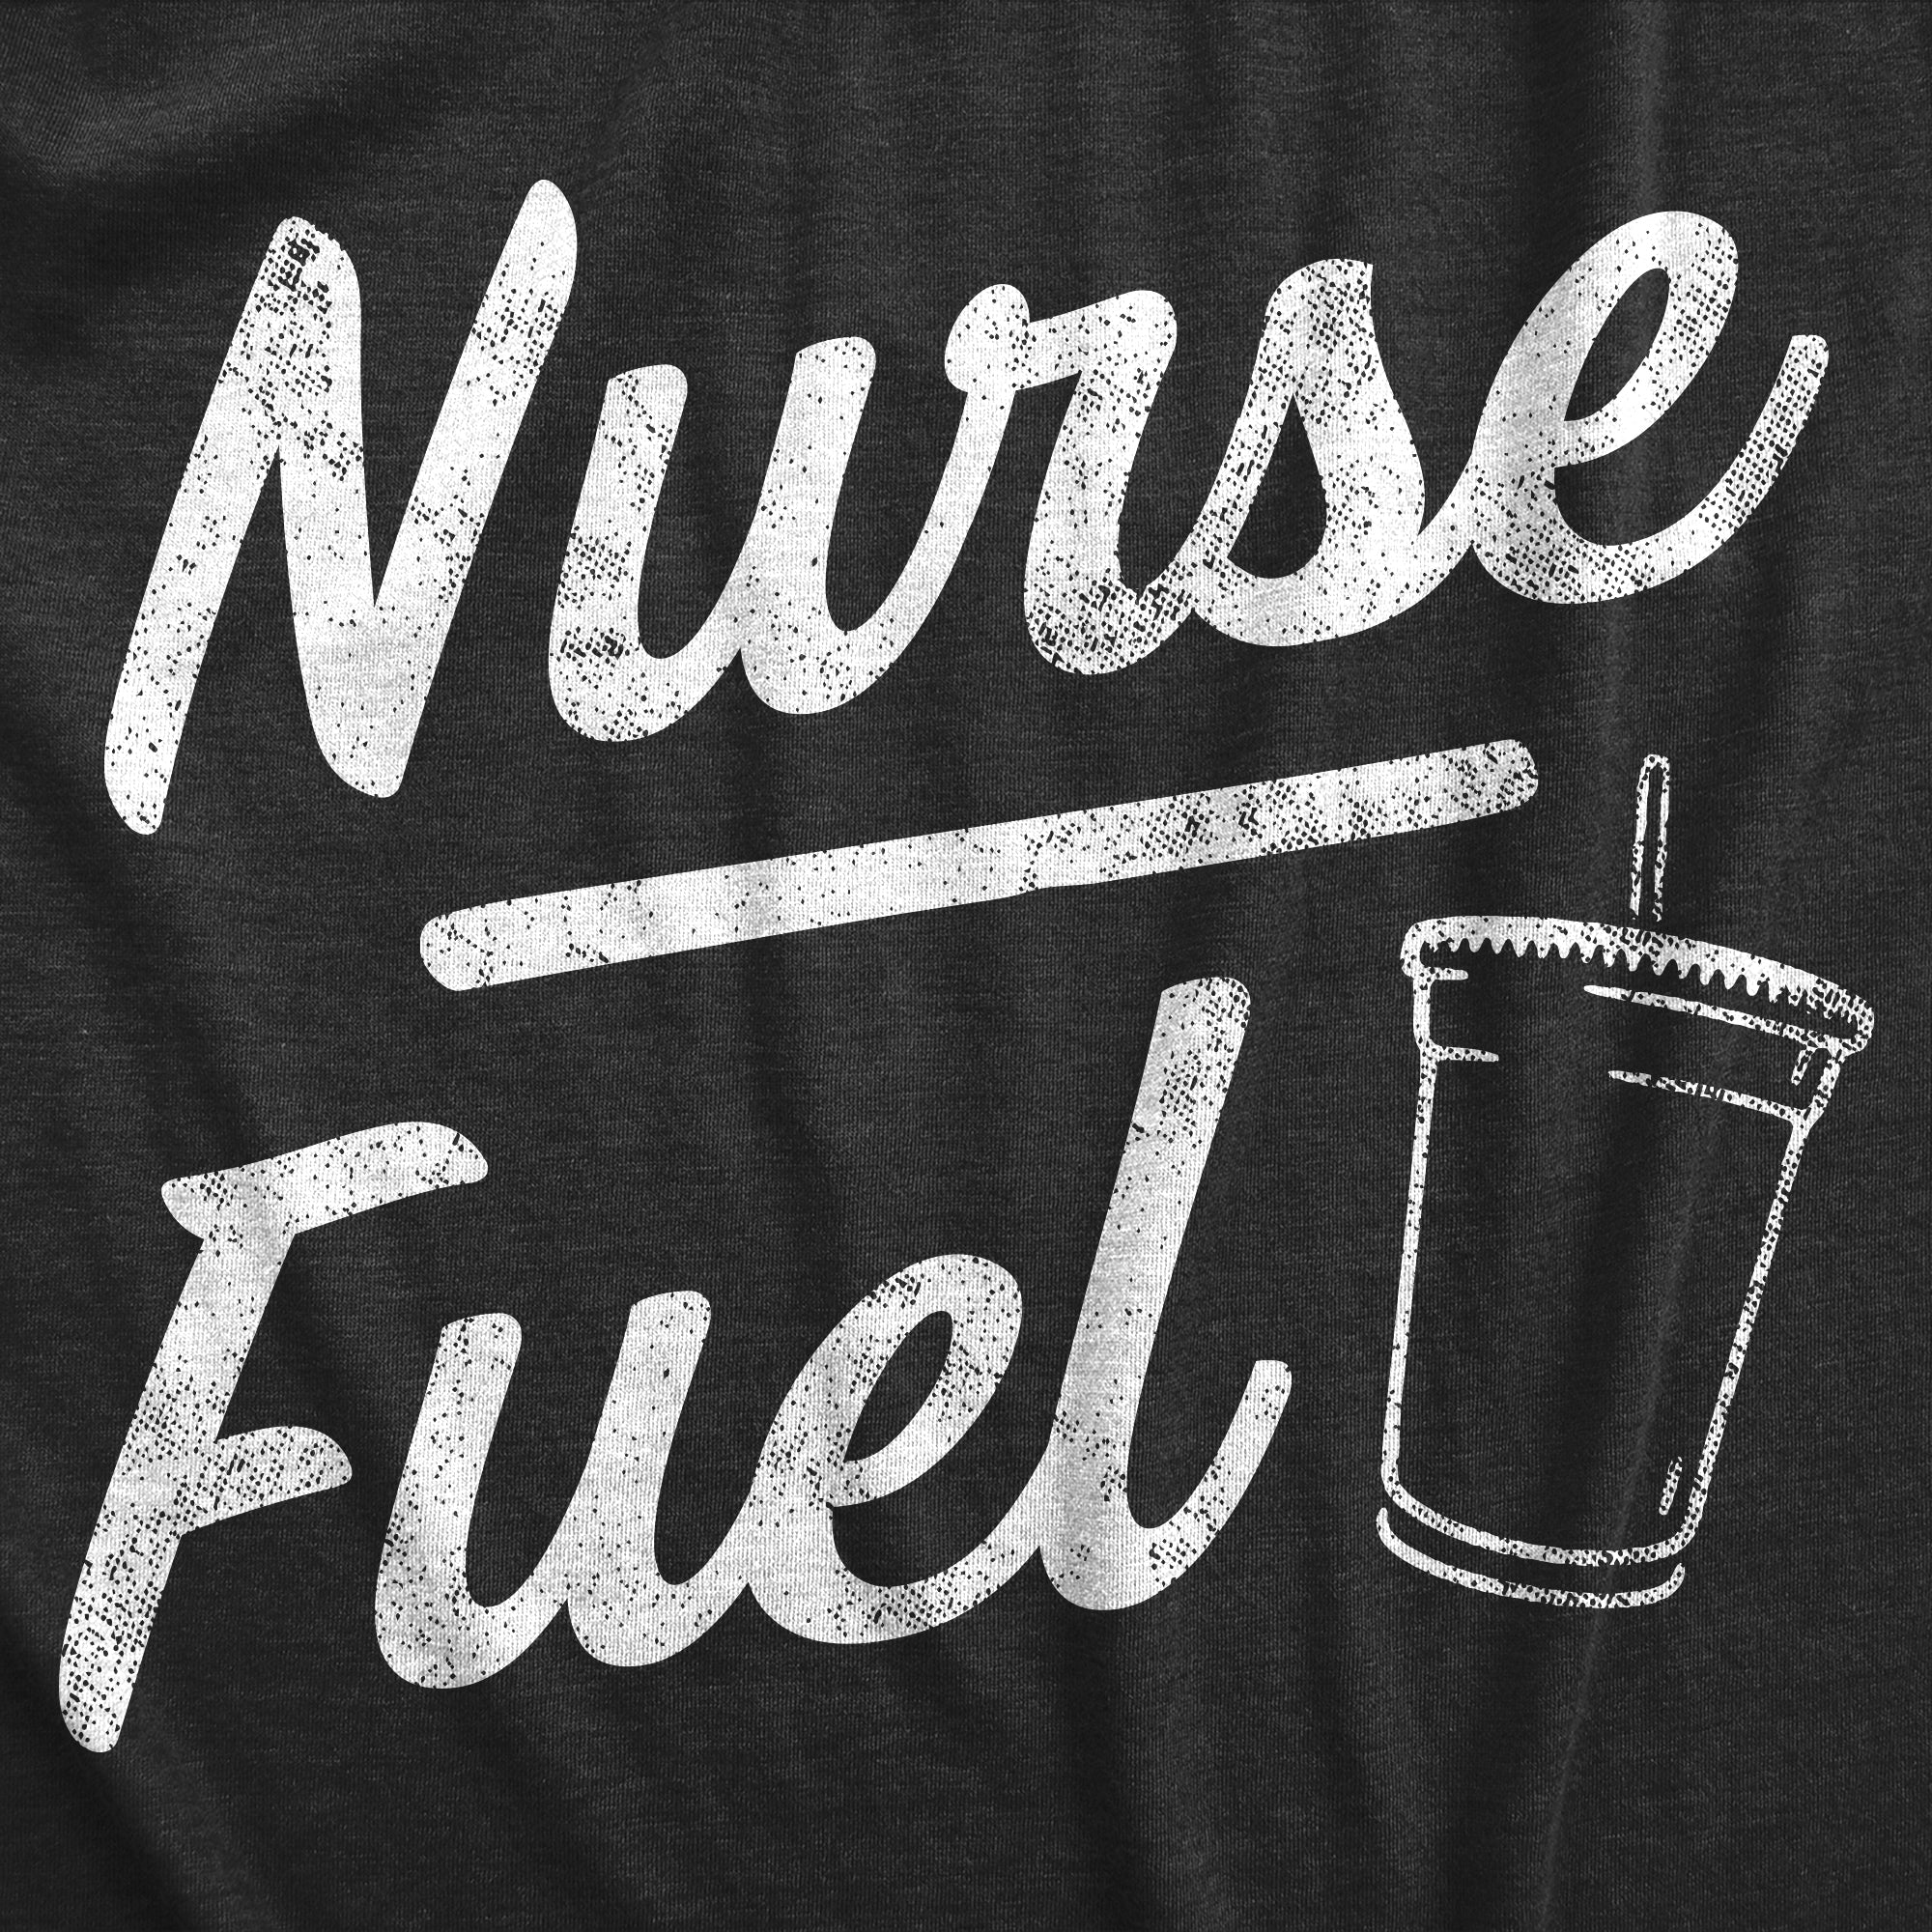 Funny Heather Black - NURSEFUEL Nurse Fuel Womens T Shirt Nerdy Coffee sarcastic Tee